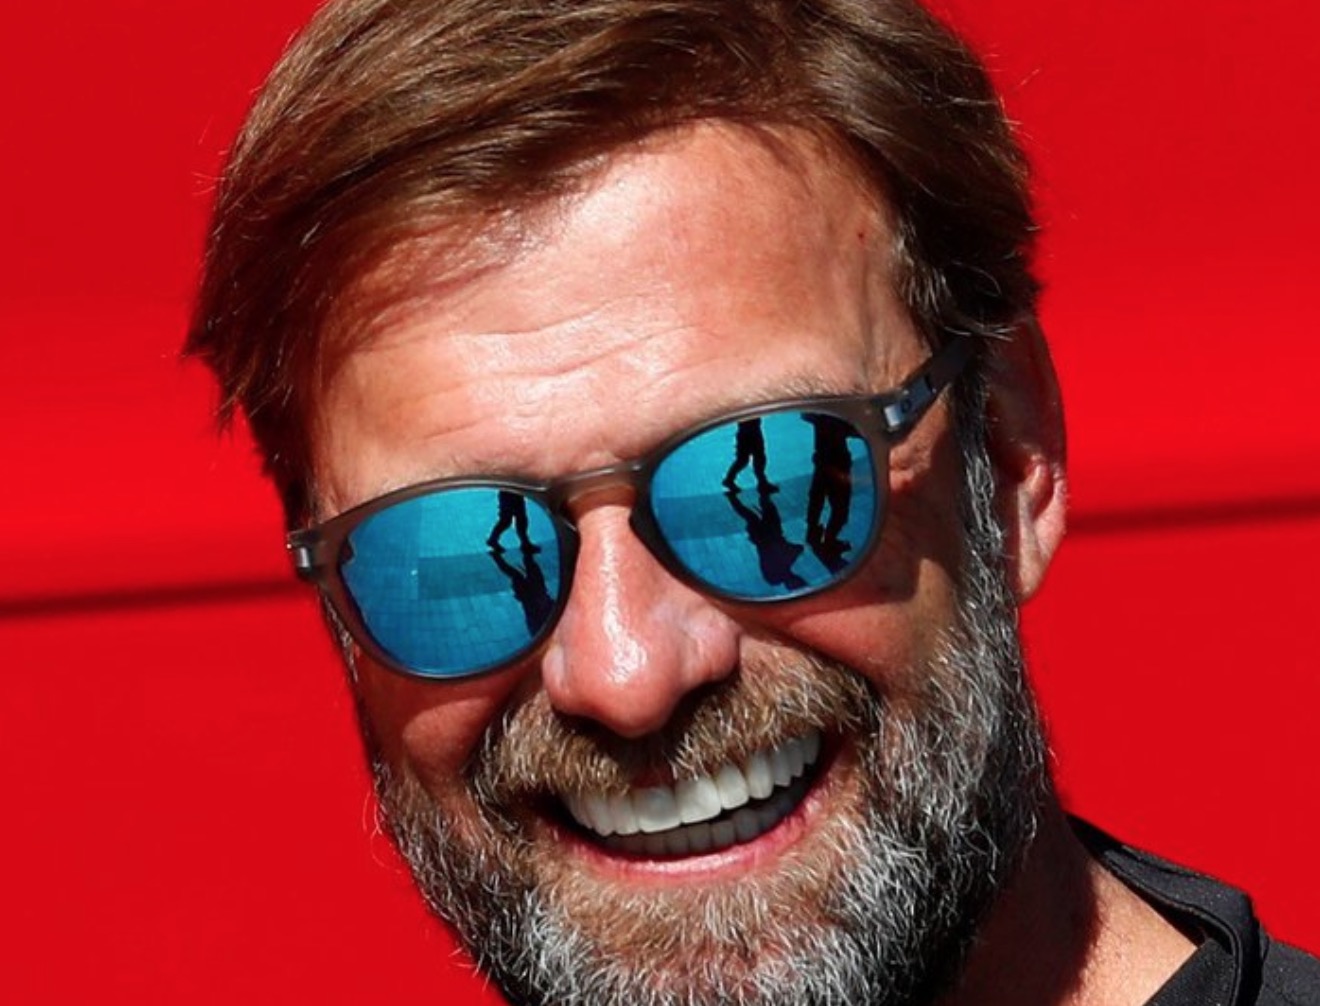 Liverpool boss Jurgen Klopp dominates all-German survey ahead of Pep and Pochettino